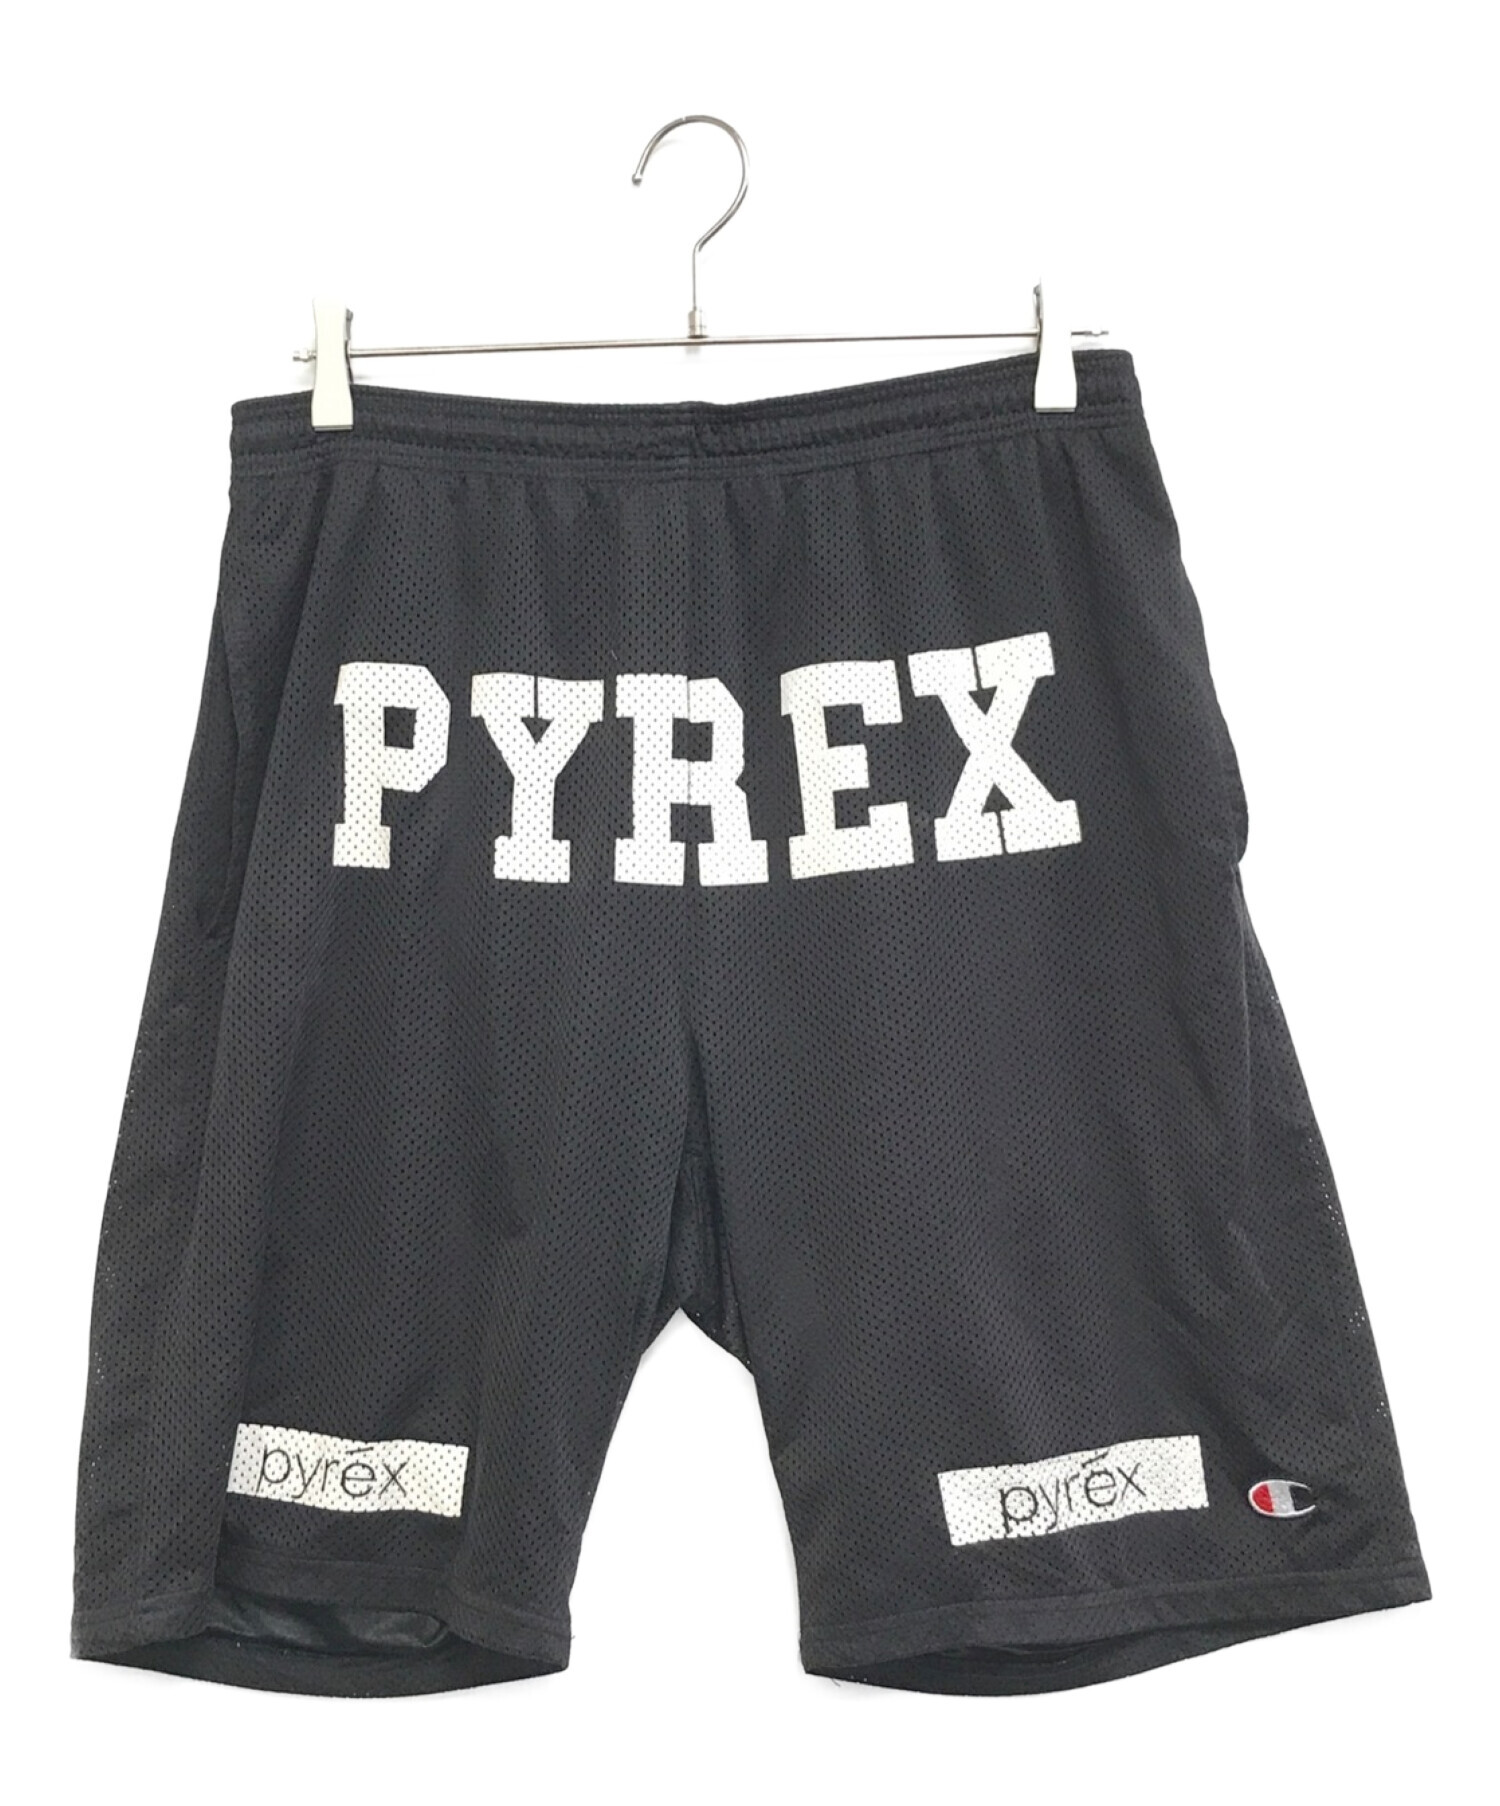 Champion (チャンピオン) PYREX VISION (パイレックス ヴィジョン) パンツ ブラック サイズ:S